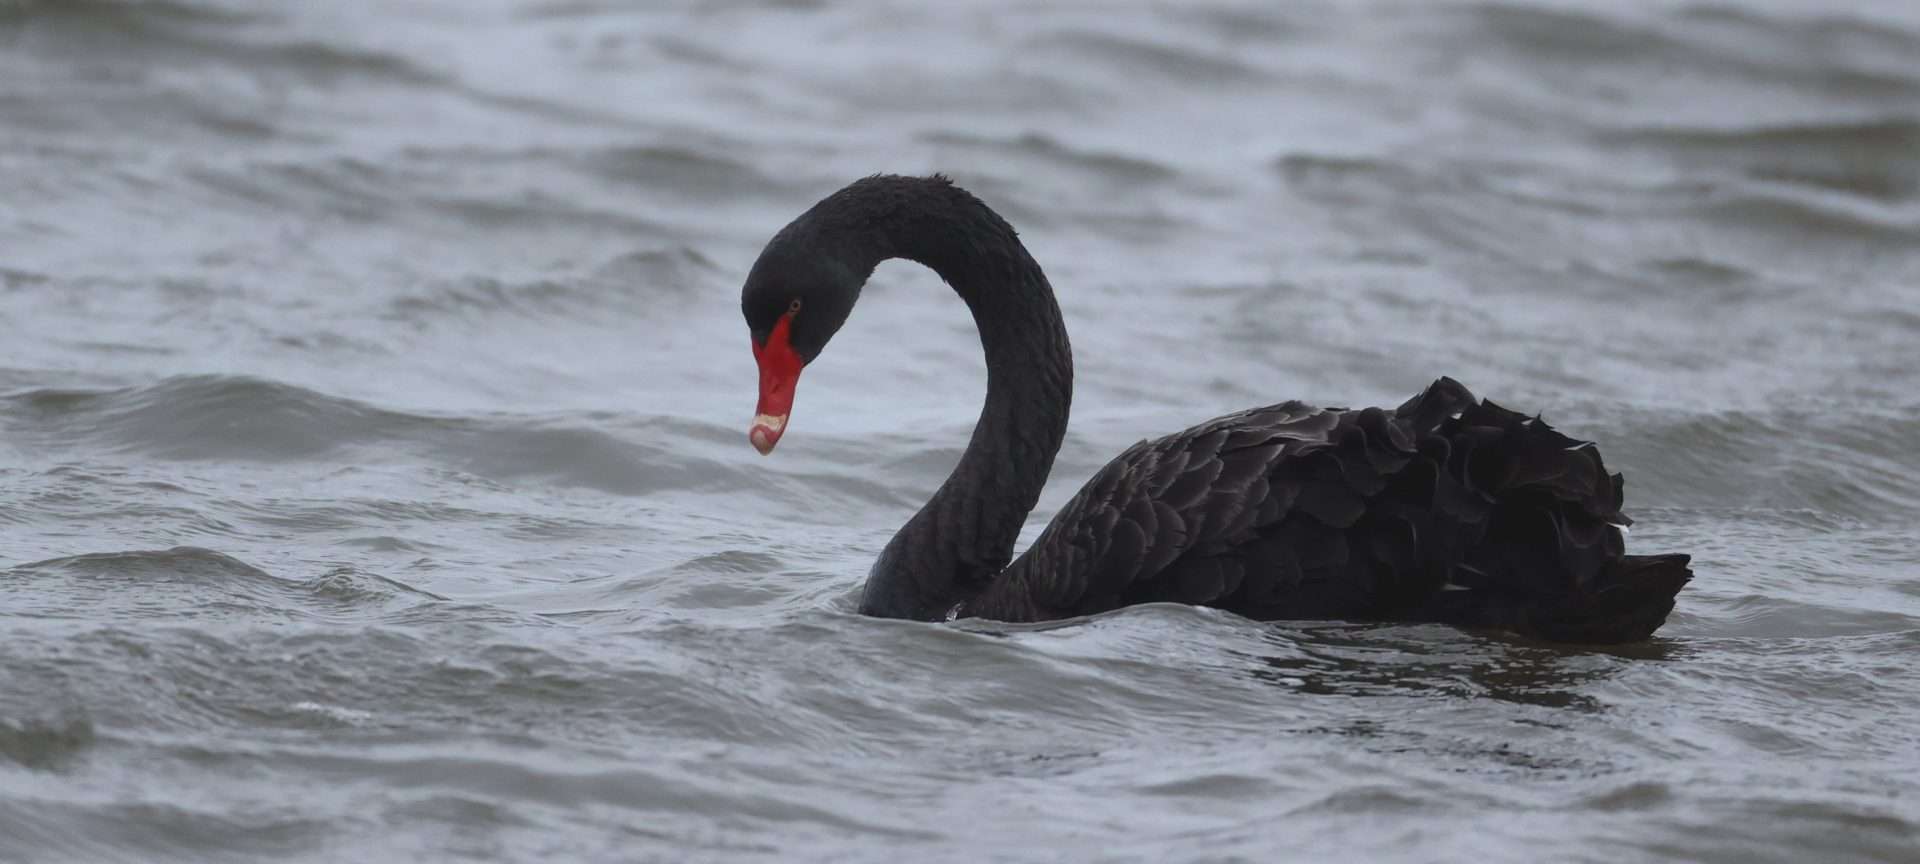 Black Swan by Steve Hopper at Beesands